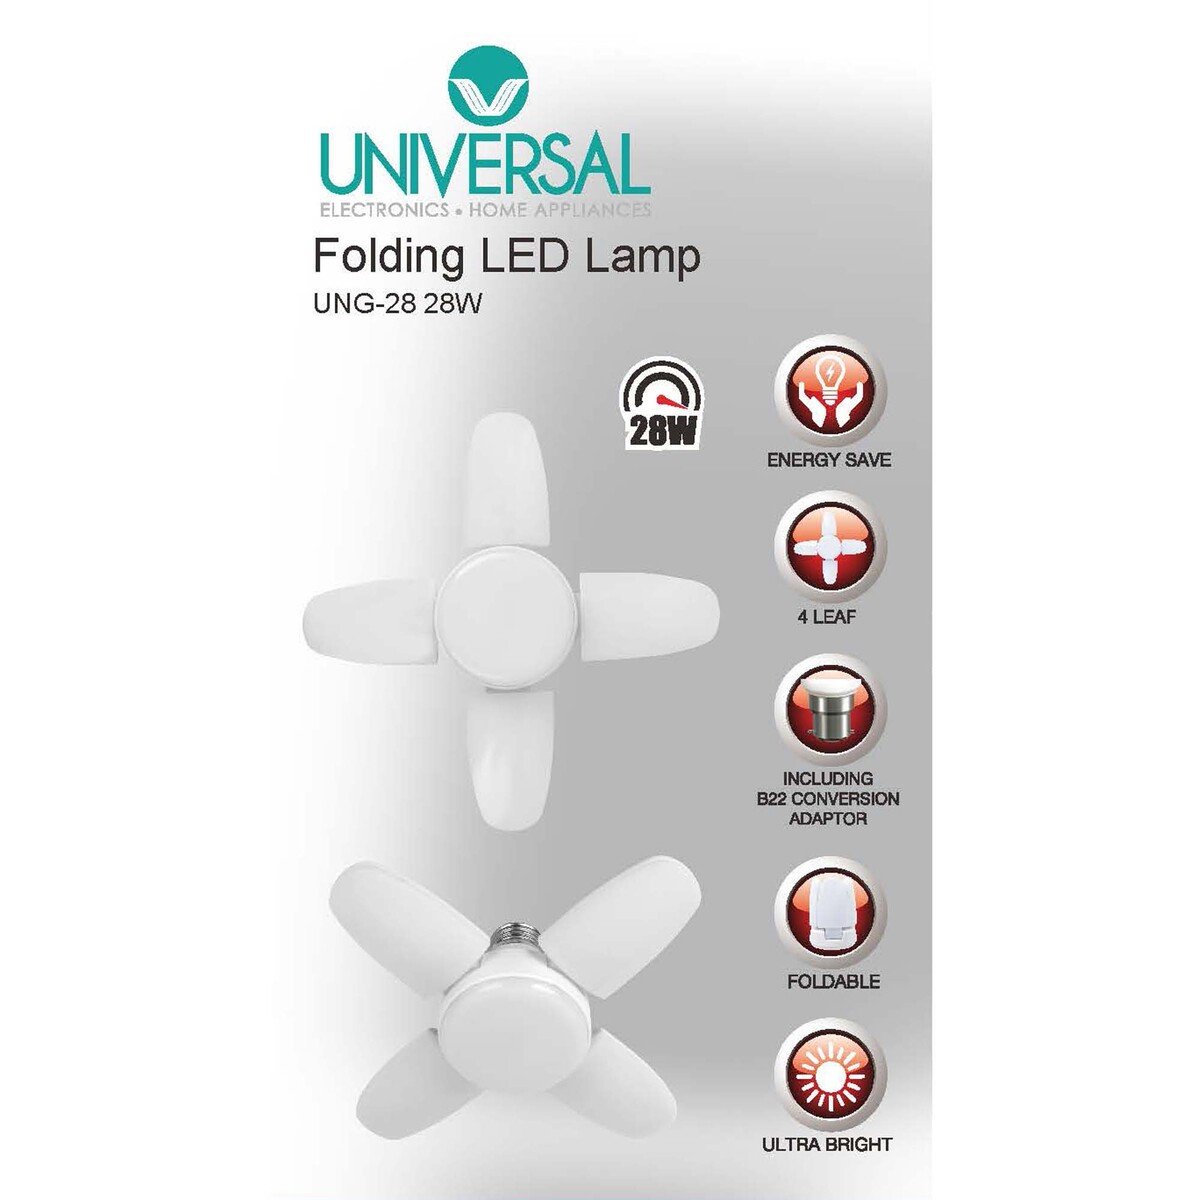 Universal Folding Led Lamp /Bulb UNG-28 28Watt